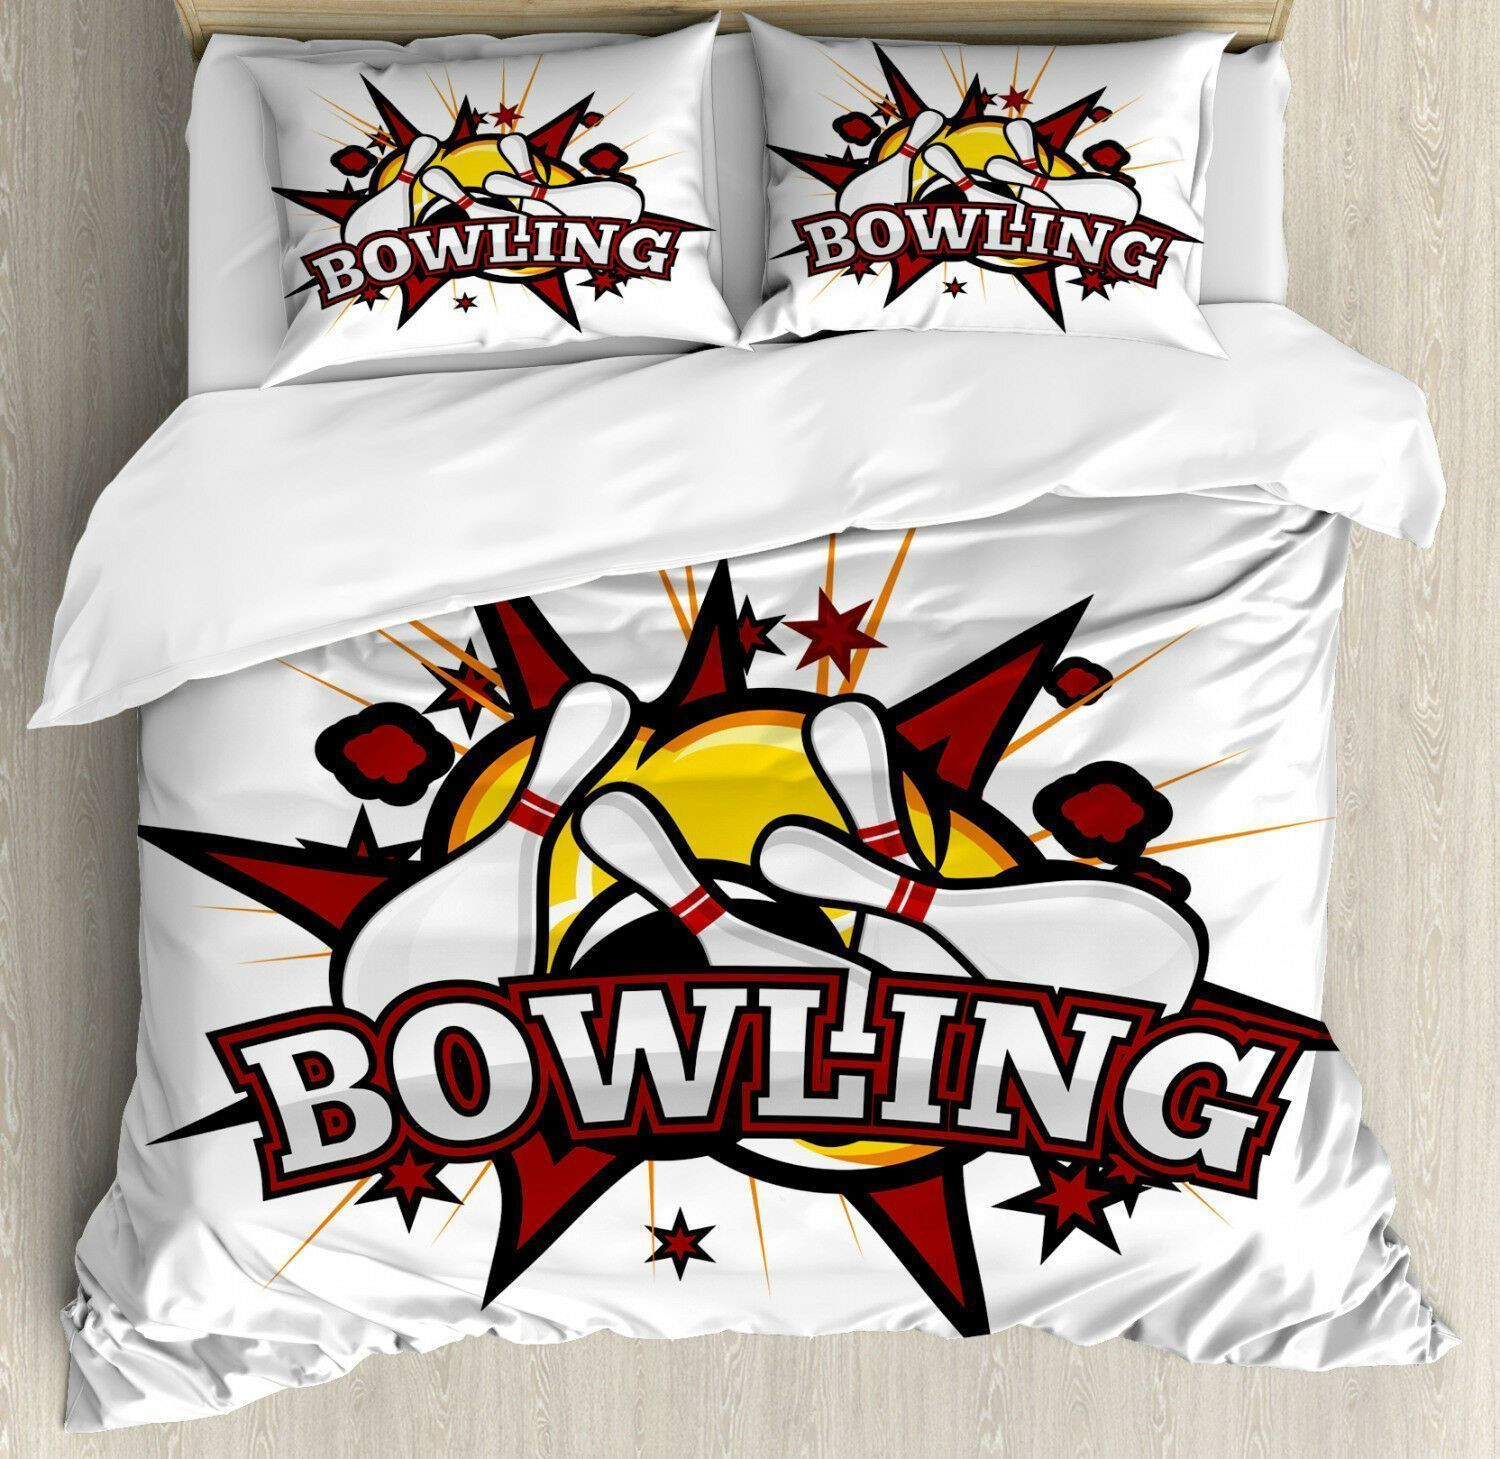 Bowling Comforters, Duvets, Sheets & Sets